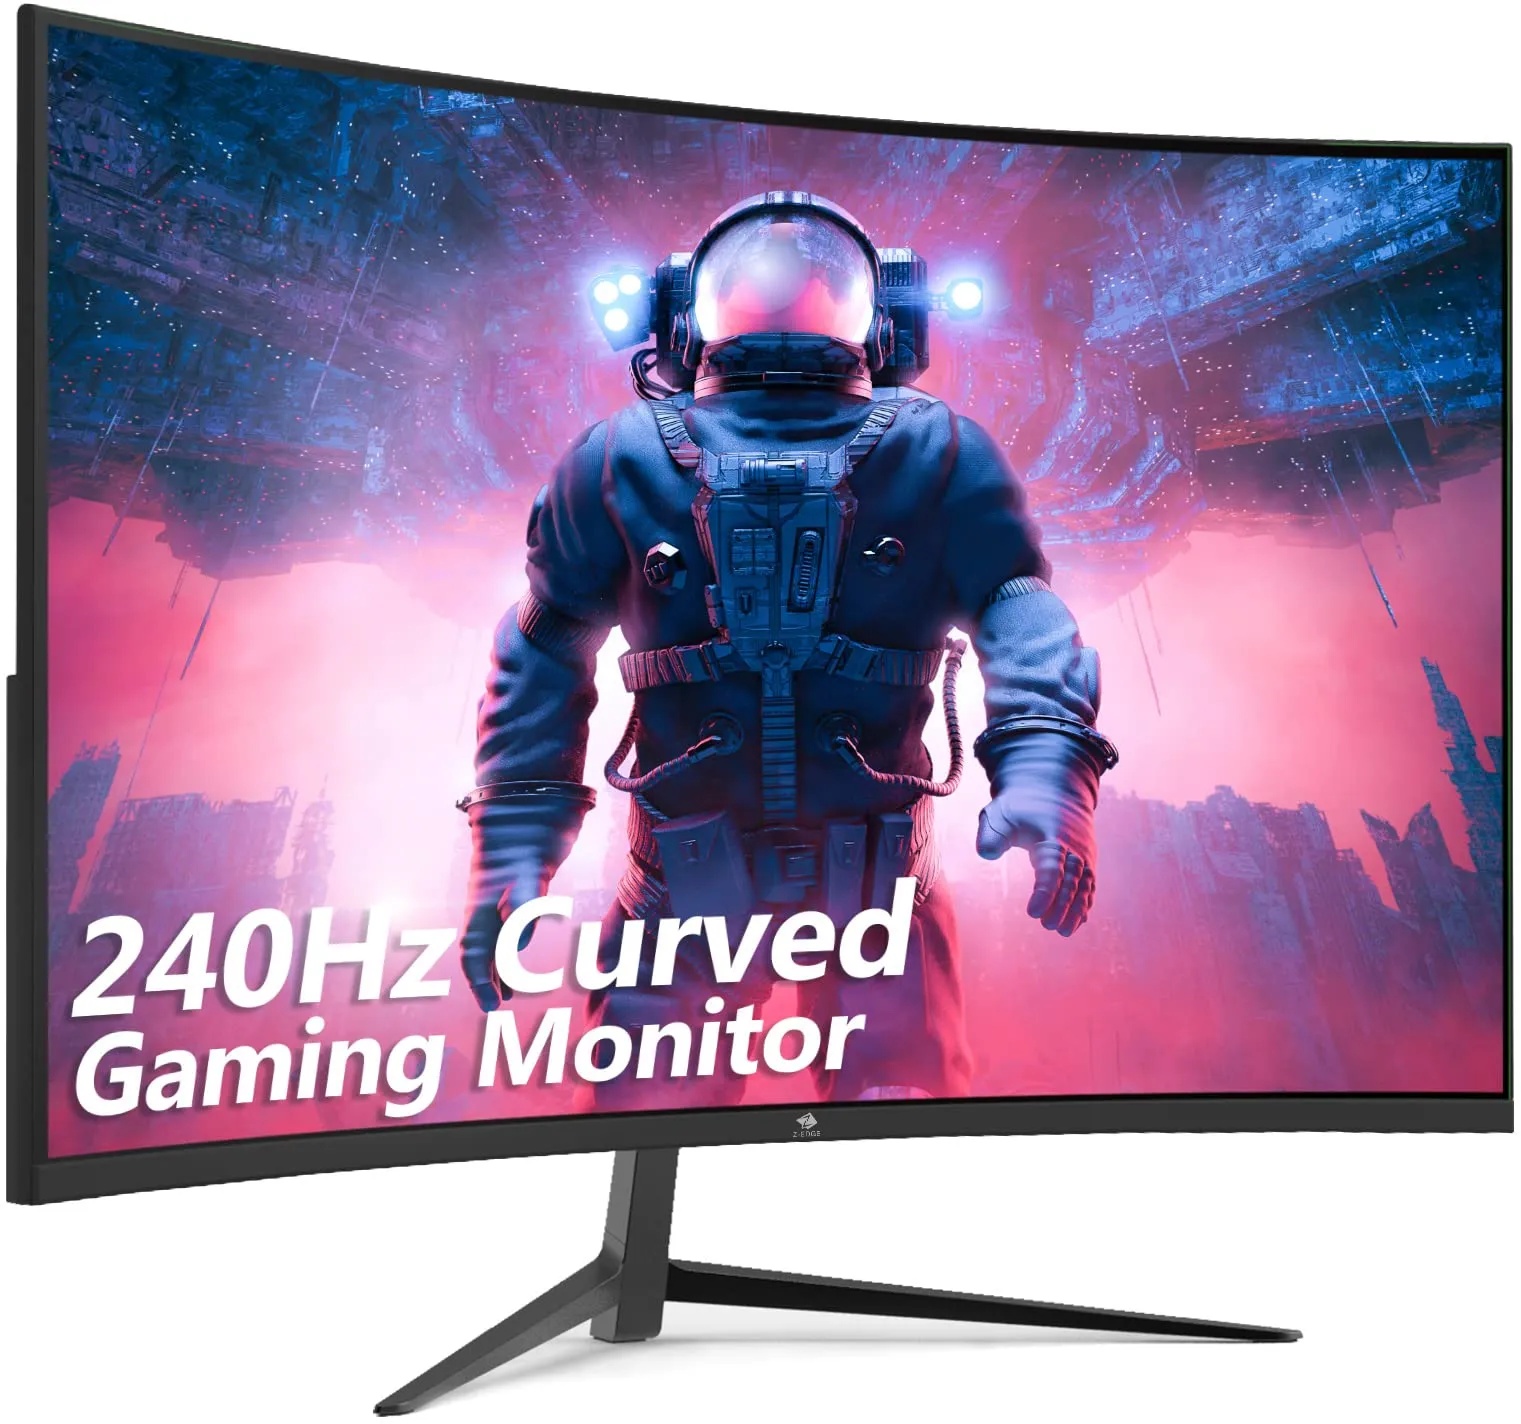 Z-Edge 27 Zoll Curved Gaming Monitor 240Hz 1ms MPRT Full HD LED Monitor, 350cd/m2 Helligkeit, 16:9 Curved Bildschirm, FreeSync, HDMI 2.0 & DisplayPort 1.2, Lautsprecher - Schwarz